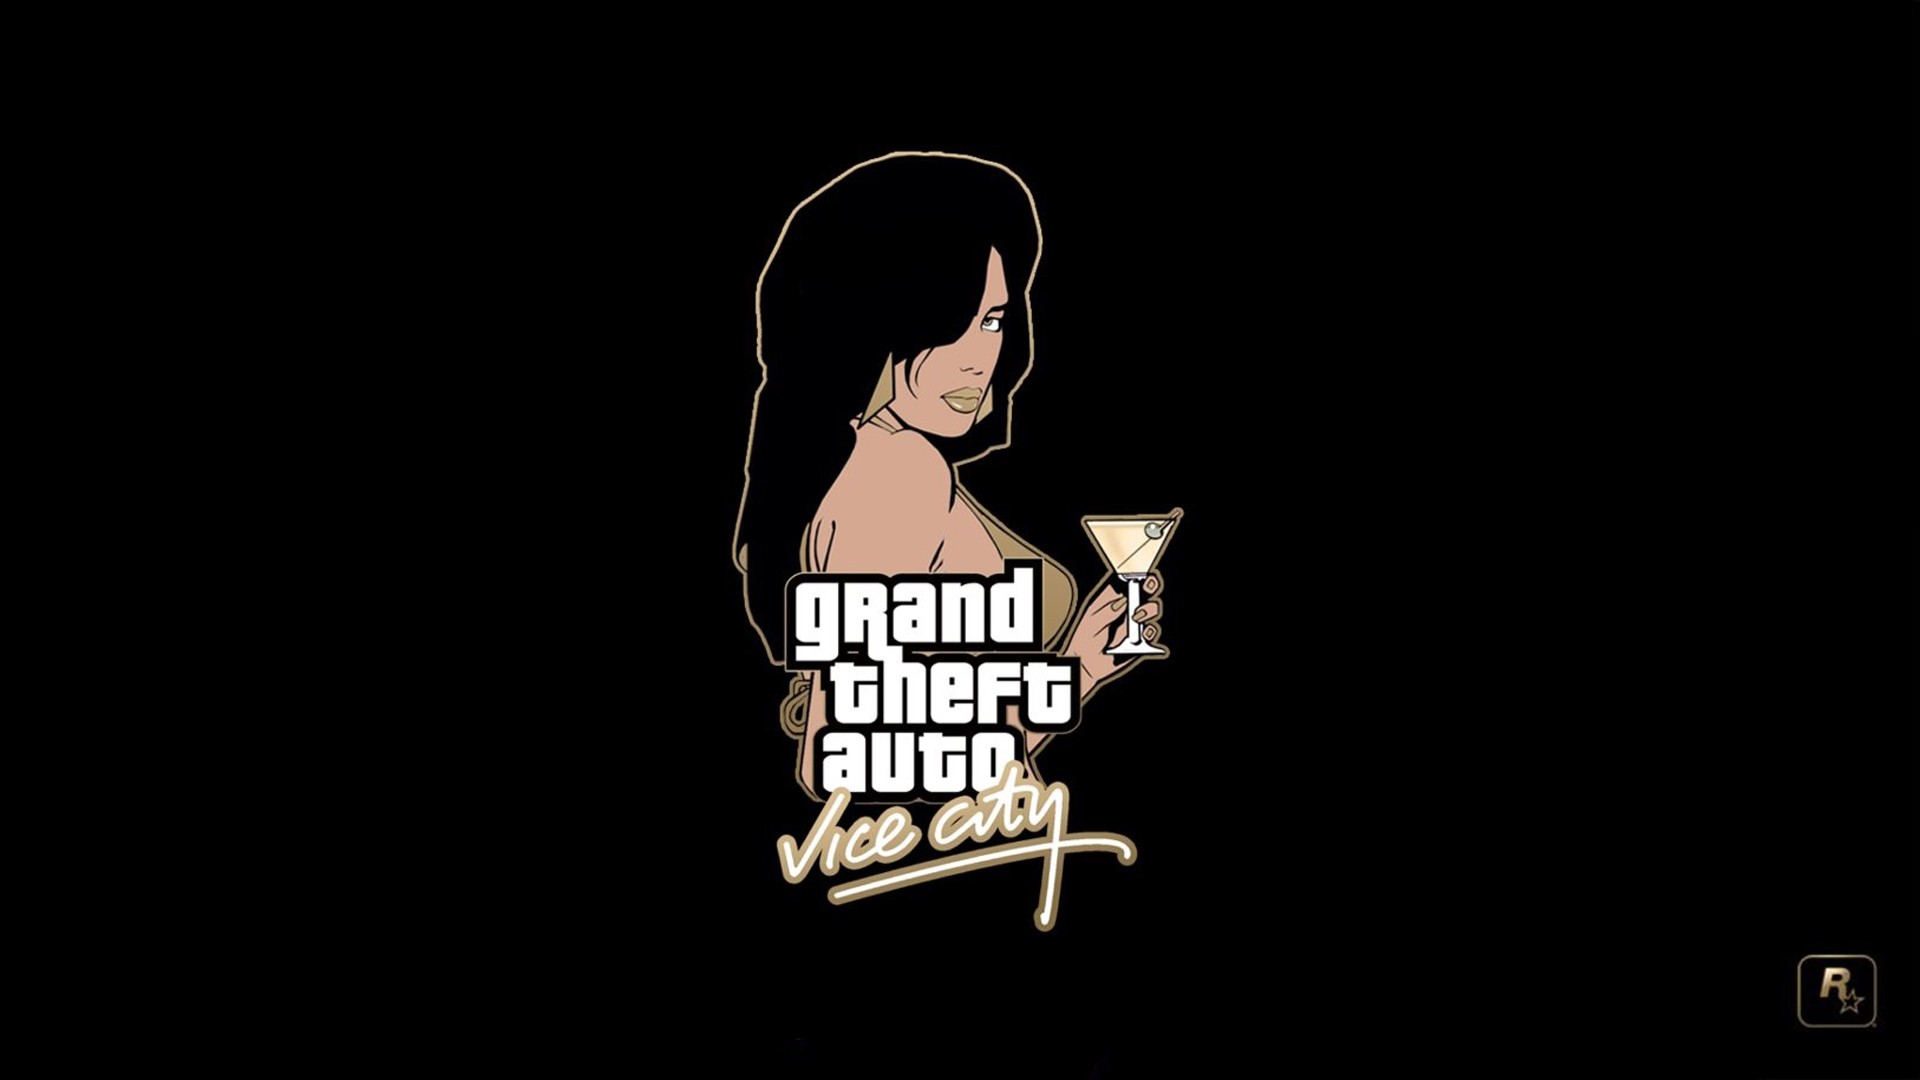 Grand Theft Auto Vice City Rockstar Games PlayStation 2 Video Games Grand Theft Auto 1920x1080